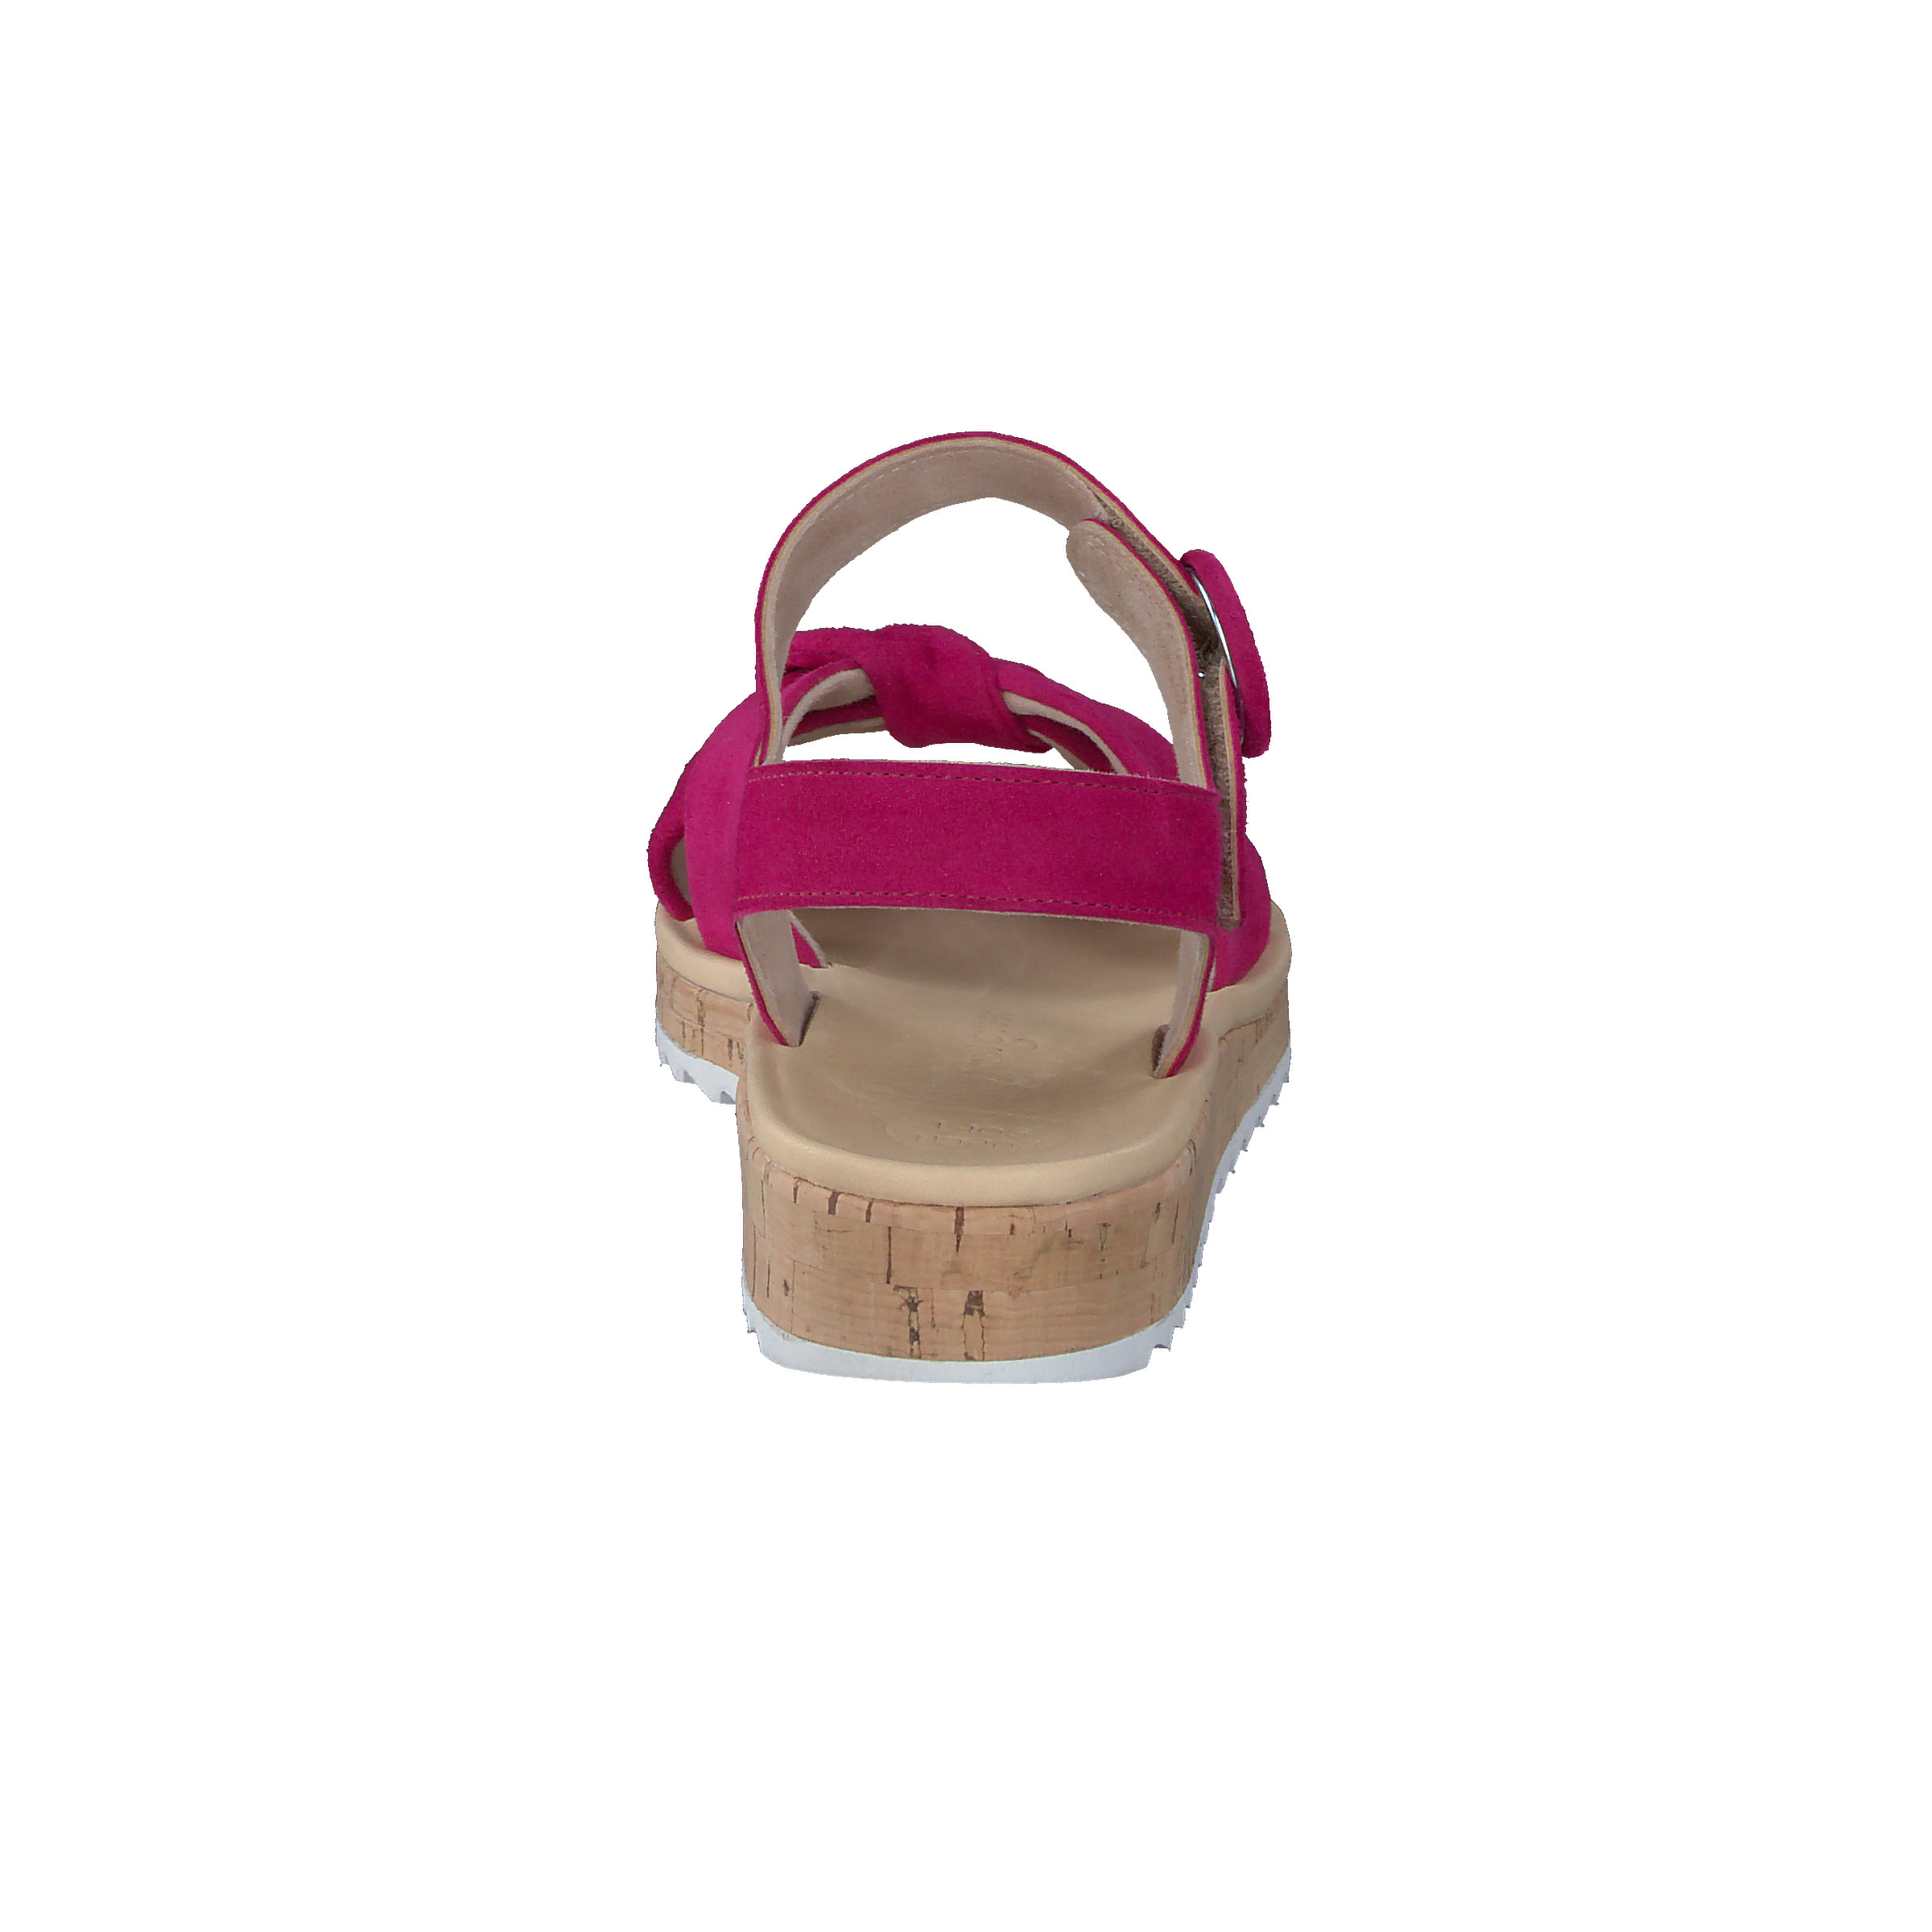 Sandalette - Pink suede leather